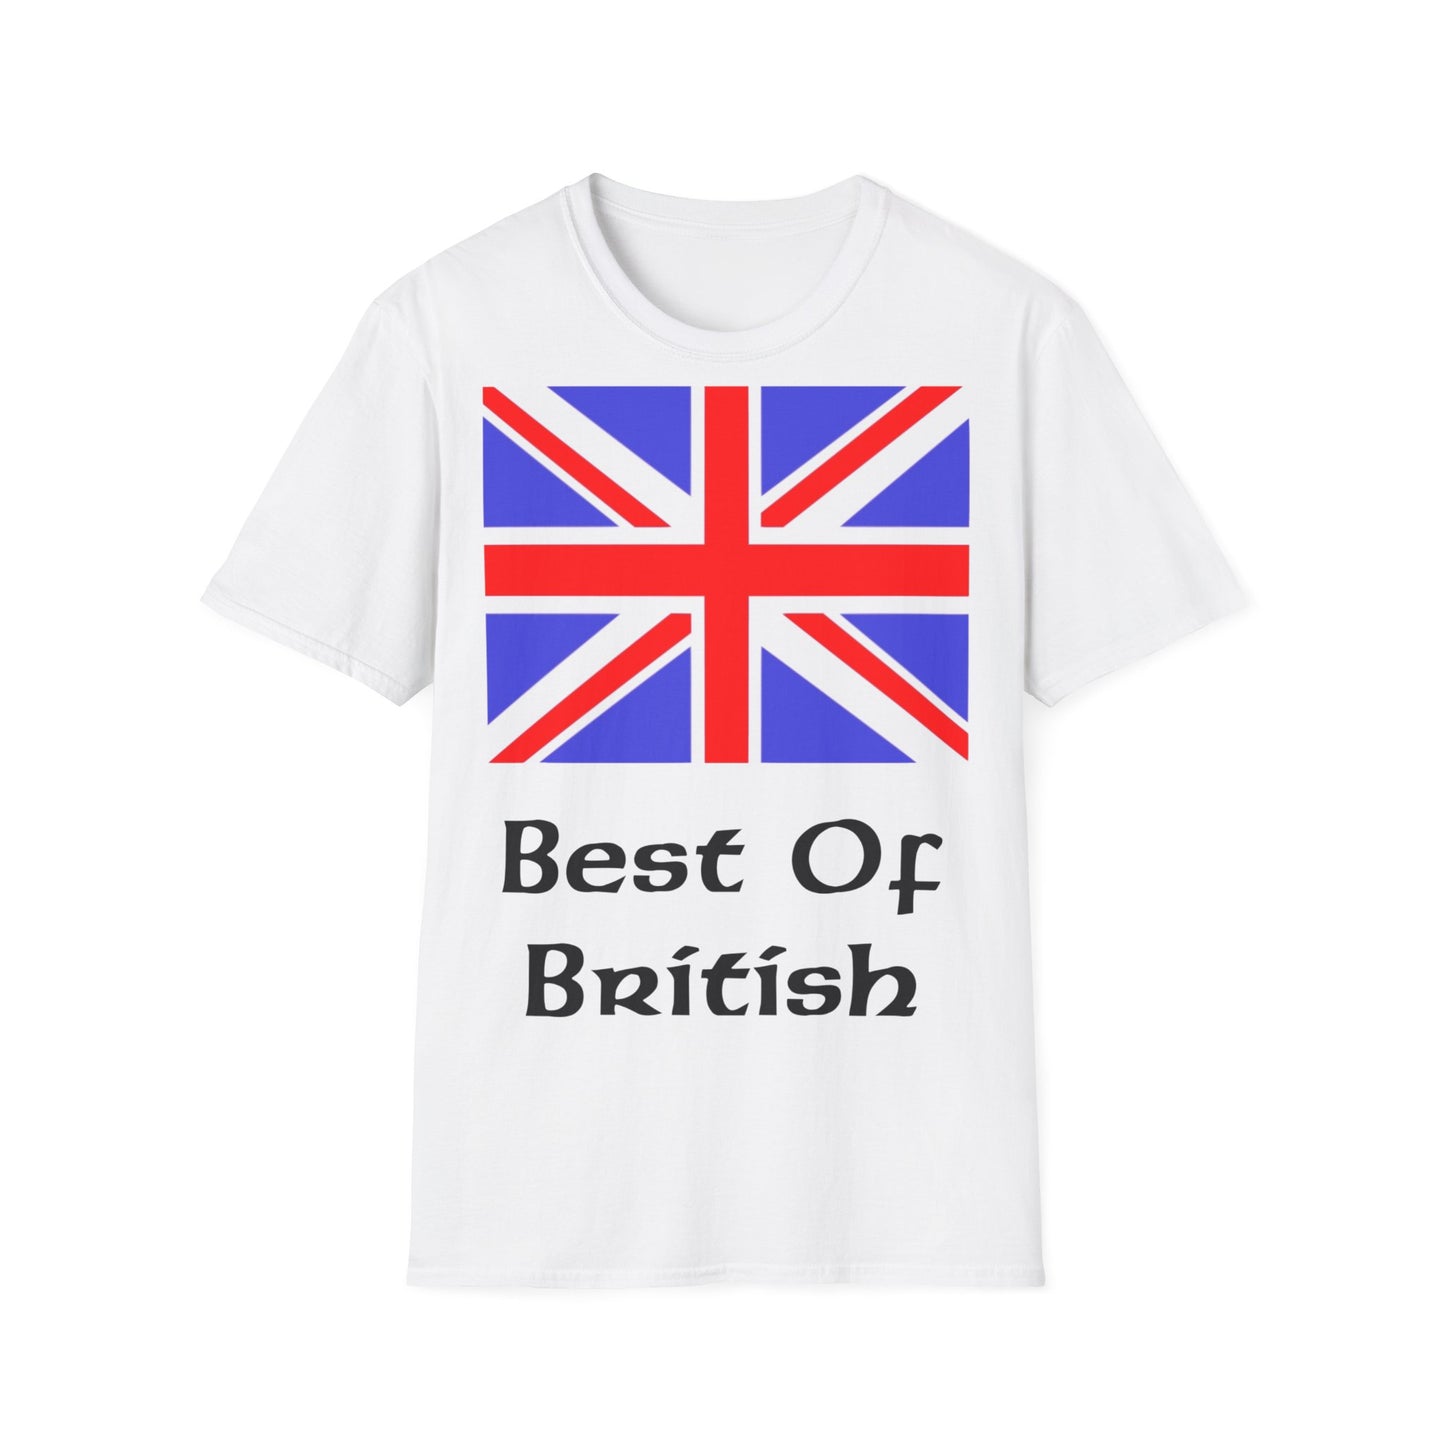 Best of British Union Jack Flag T-Shirt